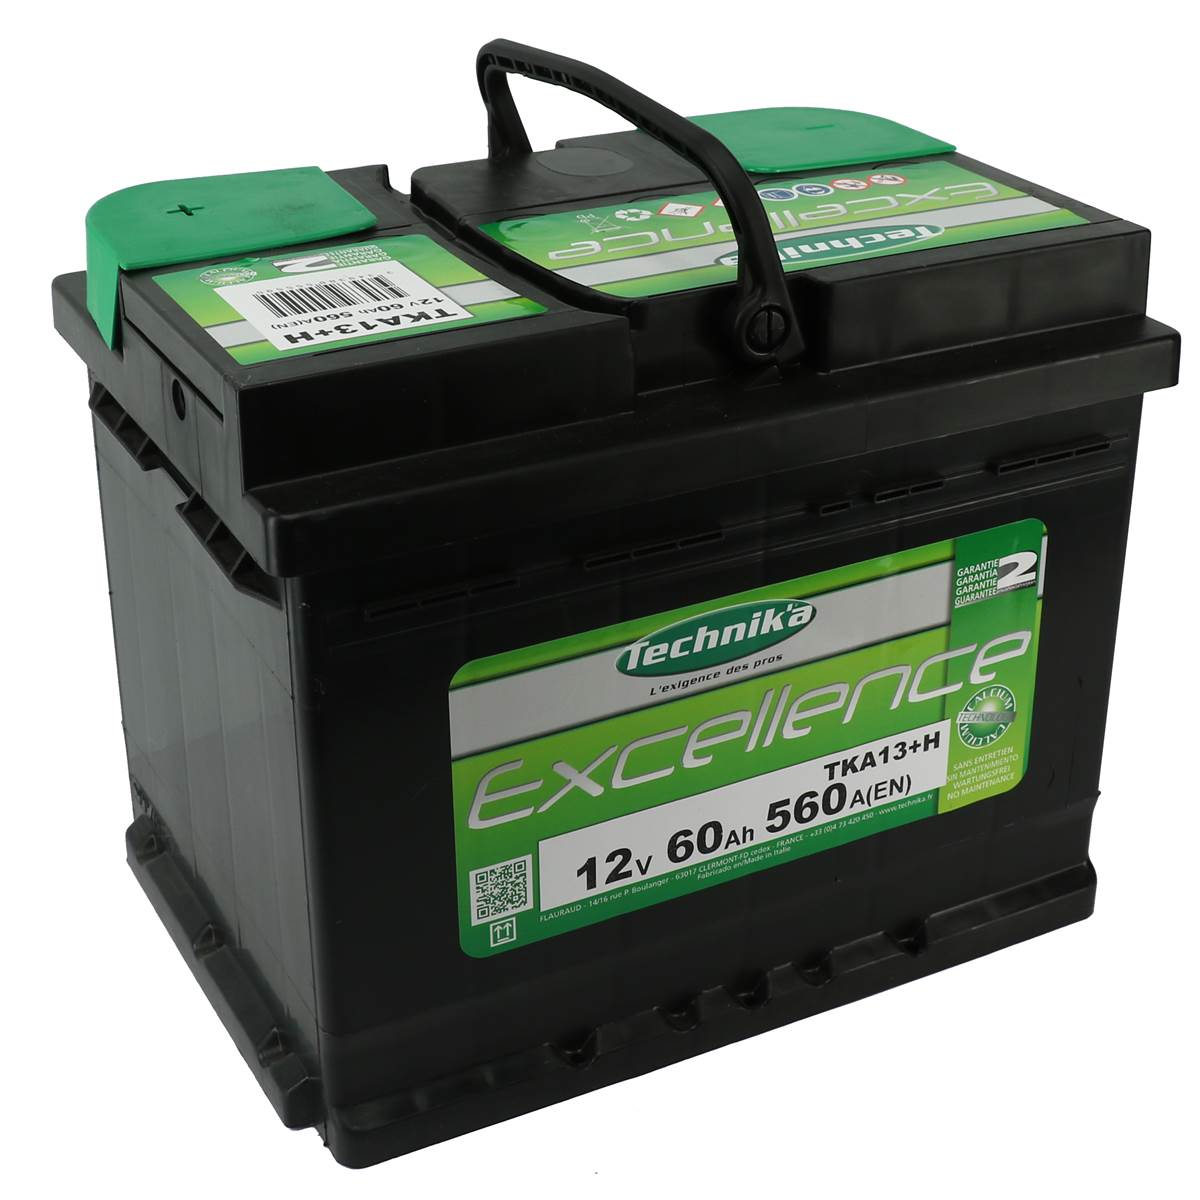 Batterie Voiture Technik'a Excellence N°13h - 60ah / 560a - 12v